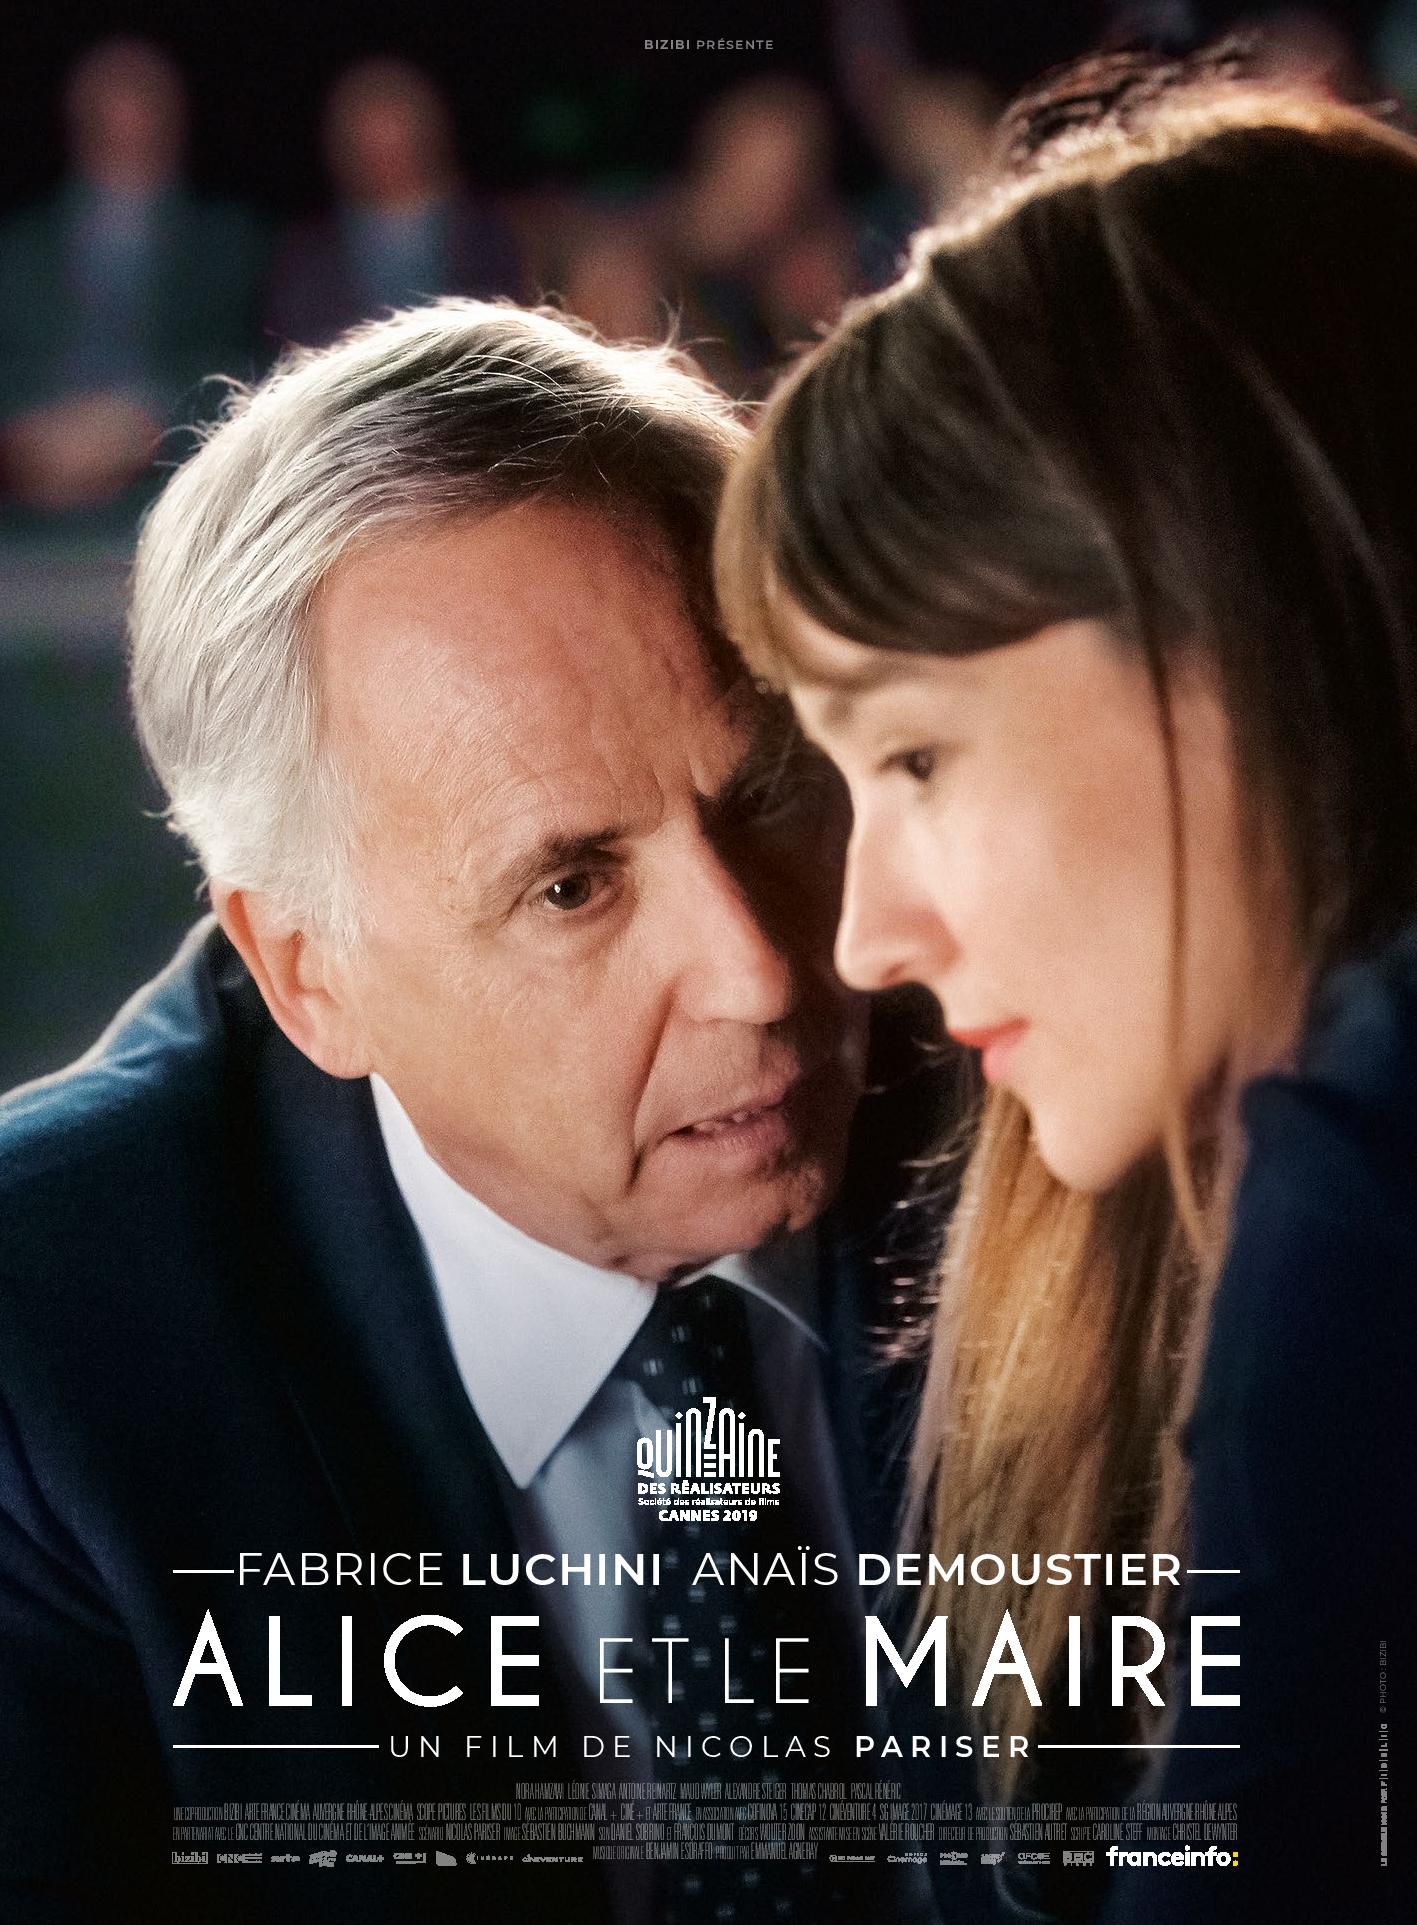 Alice et le Maire - Film (2019) streaming VF gratuit complet